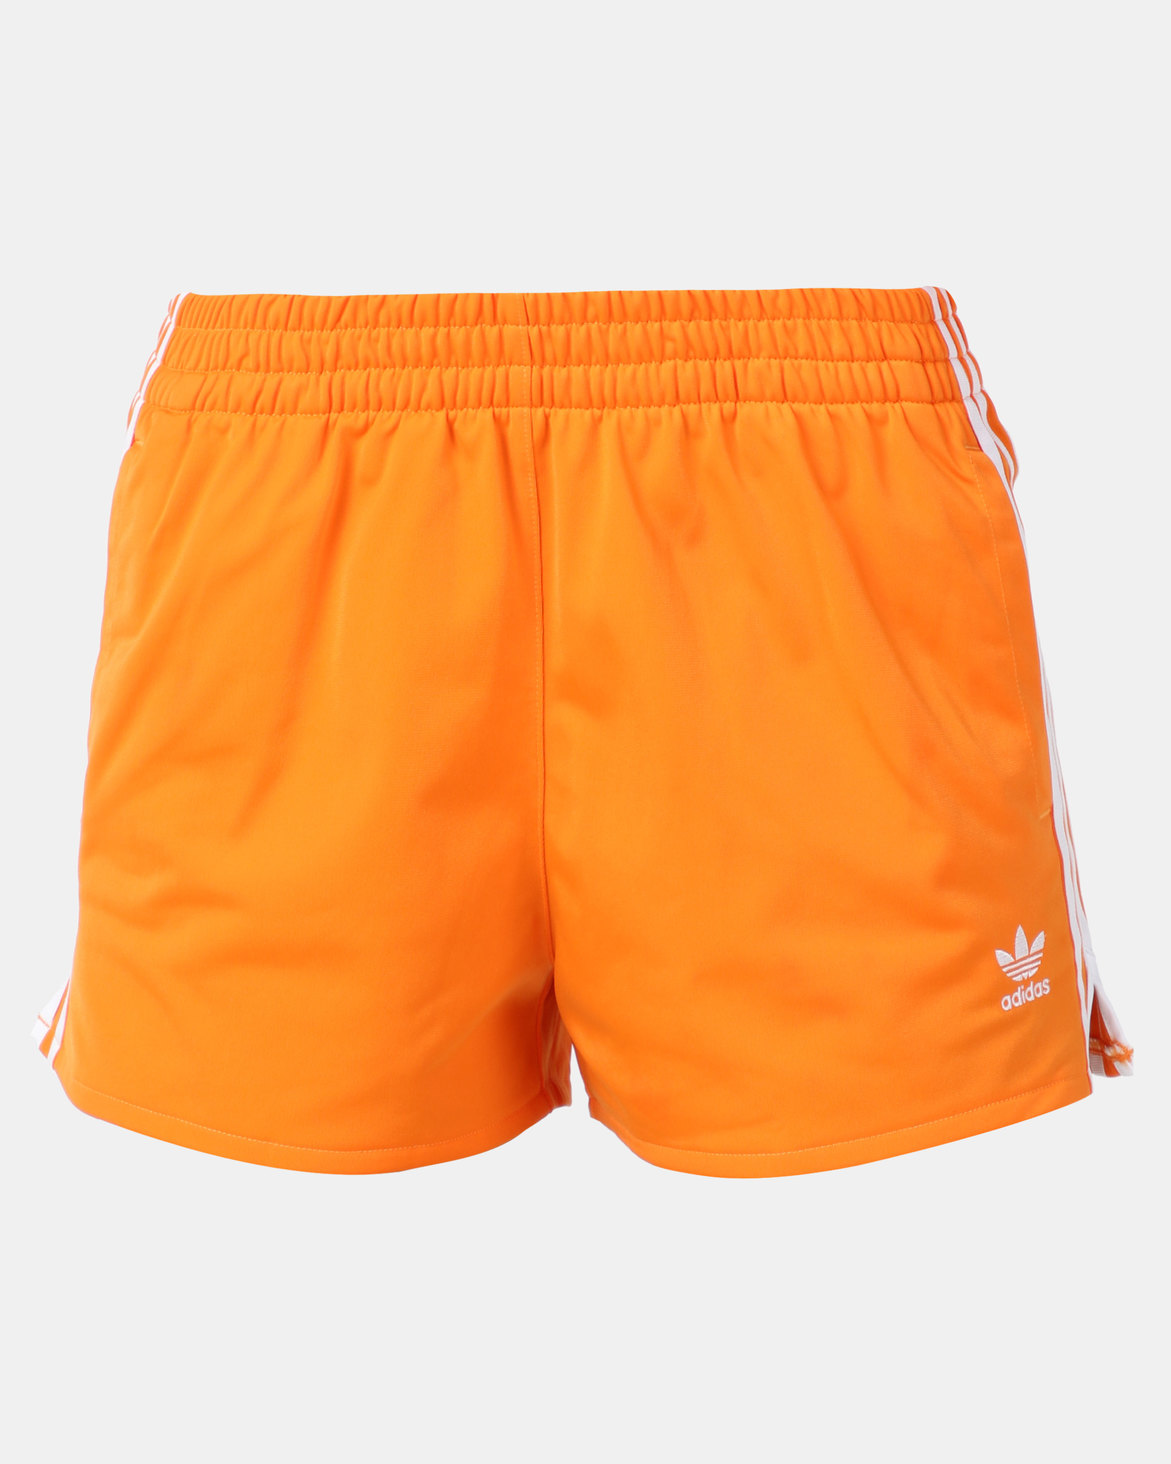 adidas Originals 3 Stripes Shorts Orange | Zando